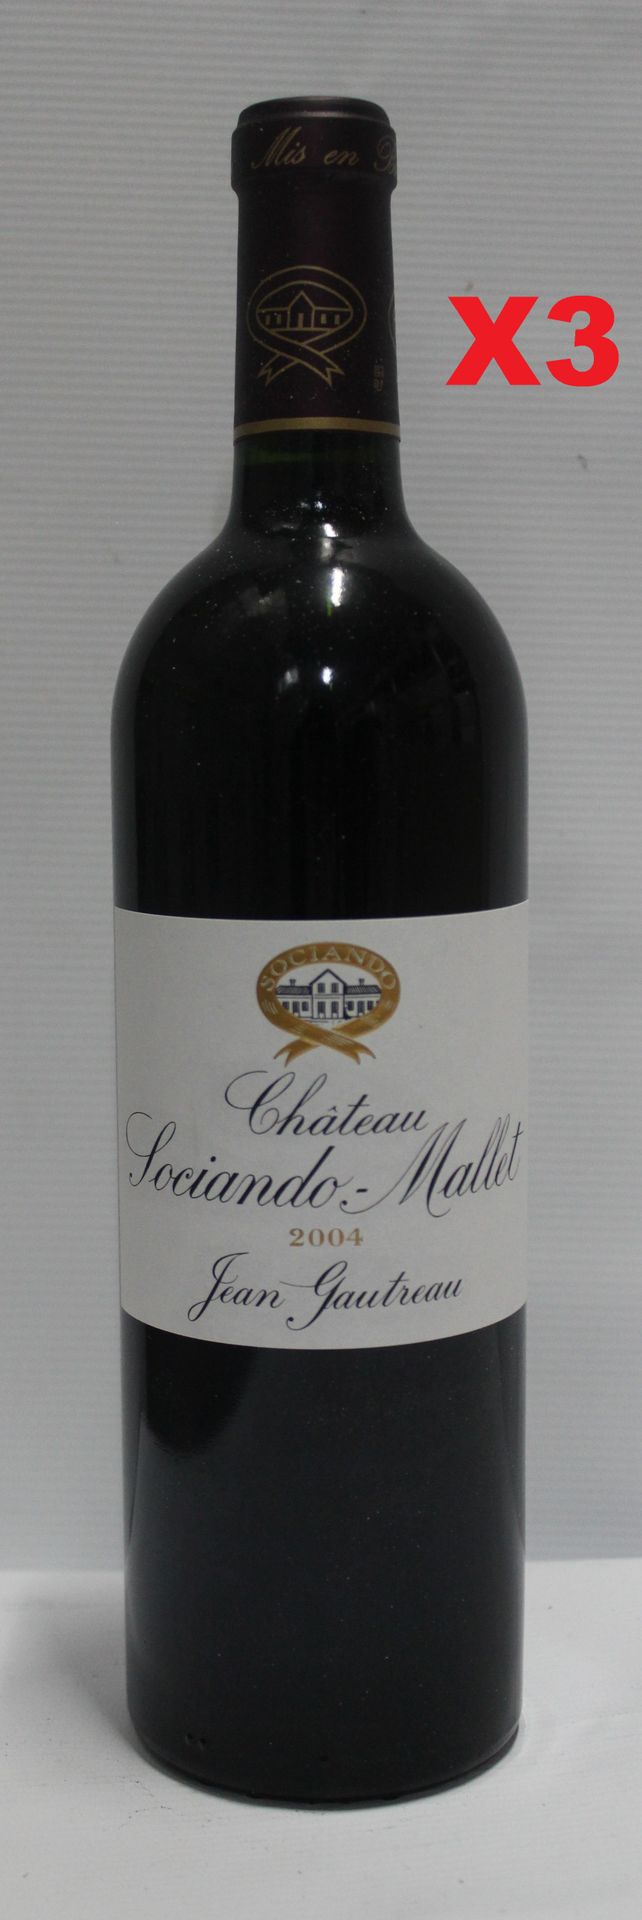 Null 3 Flaschen 75cl - Haut-Médoc - Château SOCIANDO MALLET - Rot 2004

Die Flas&hellip;